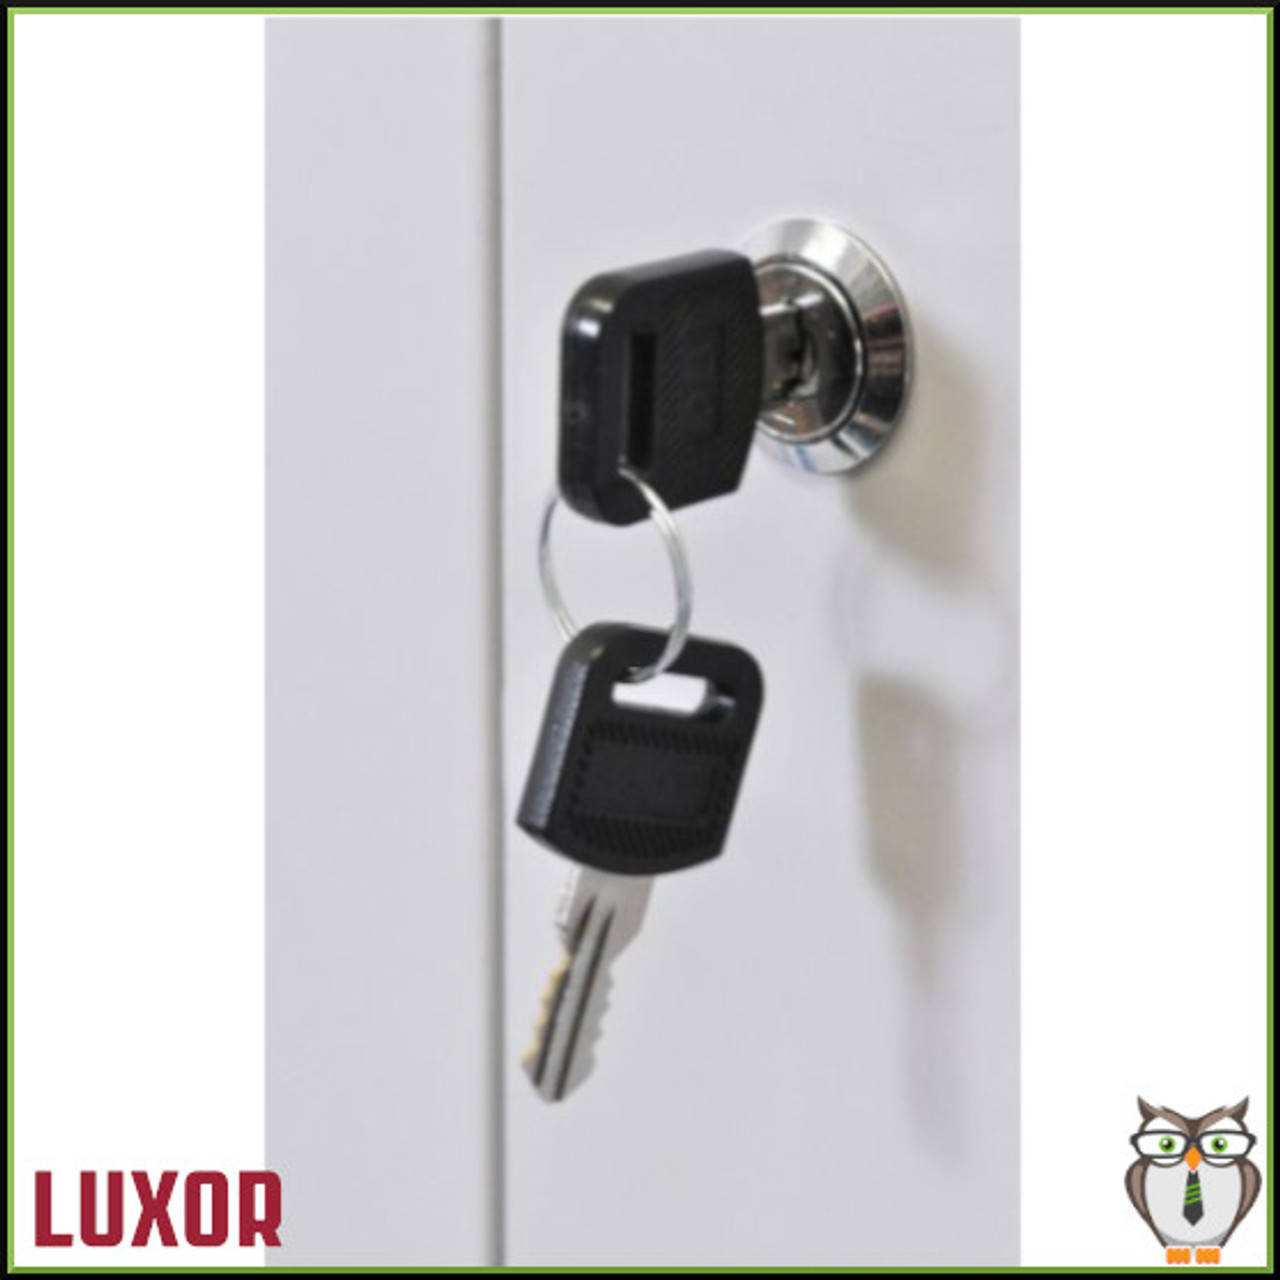 Luxor 16-Tablet Wall / Desk Charging Box (LLTMW16-G) - Key Lock